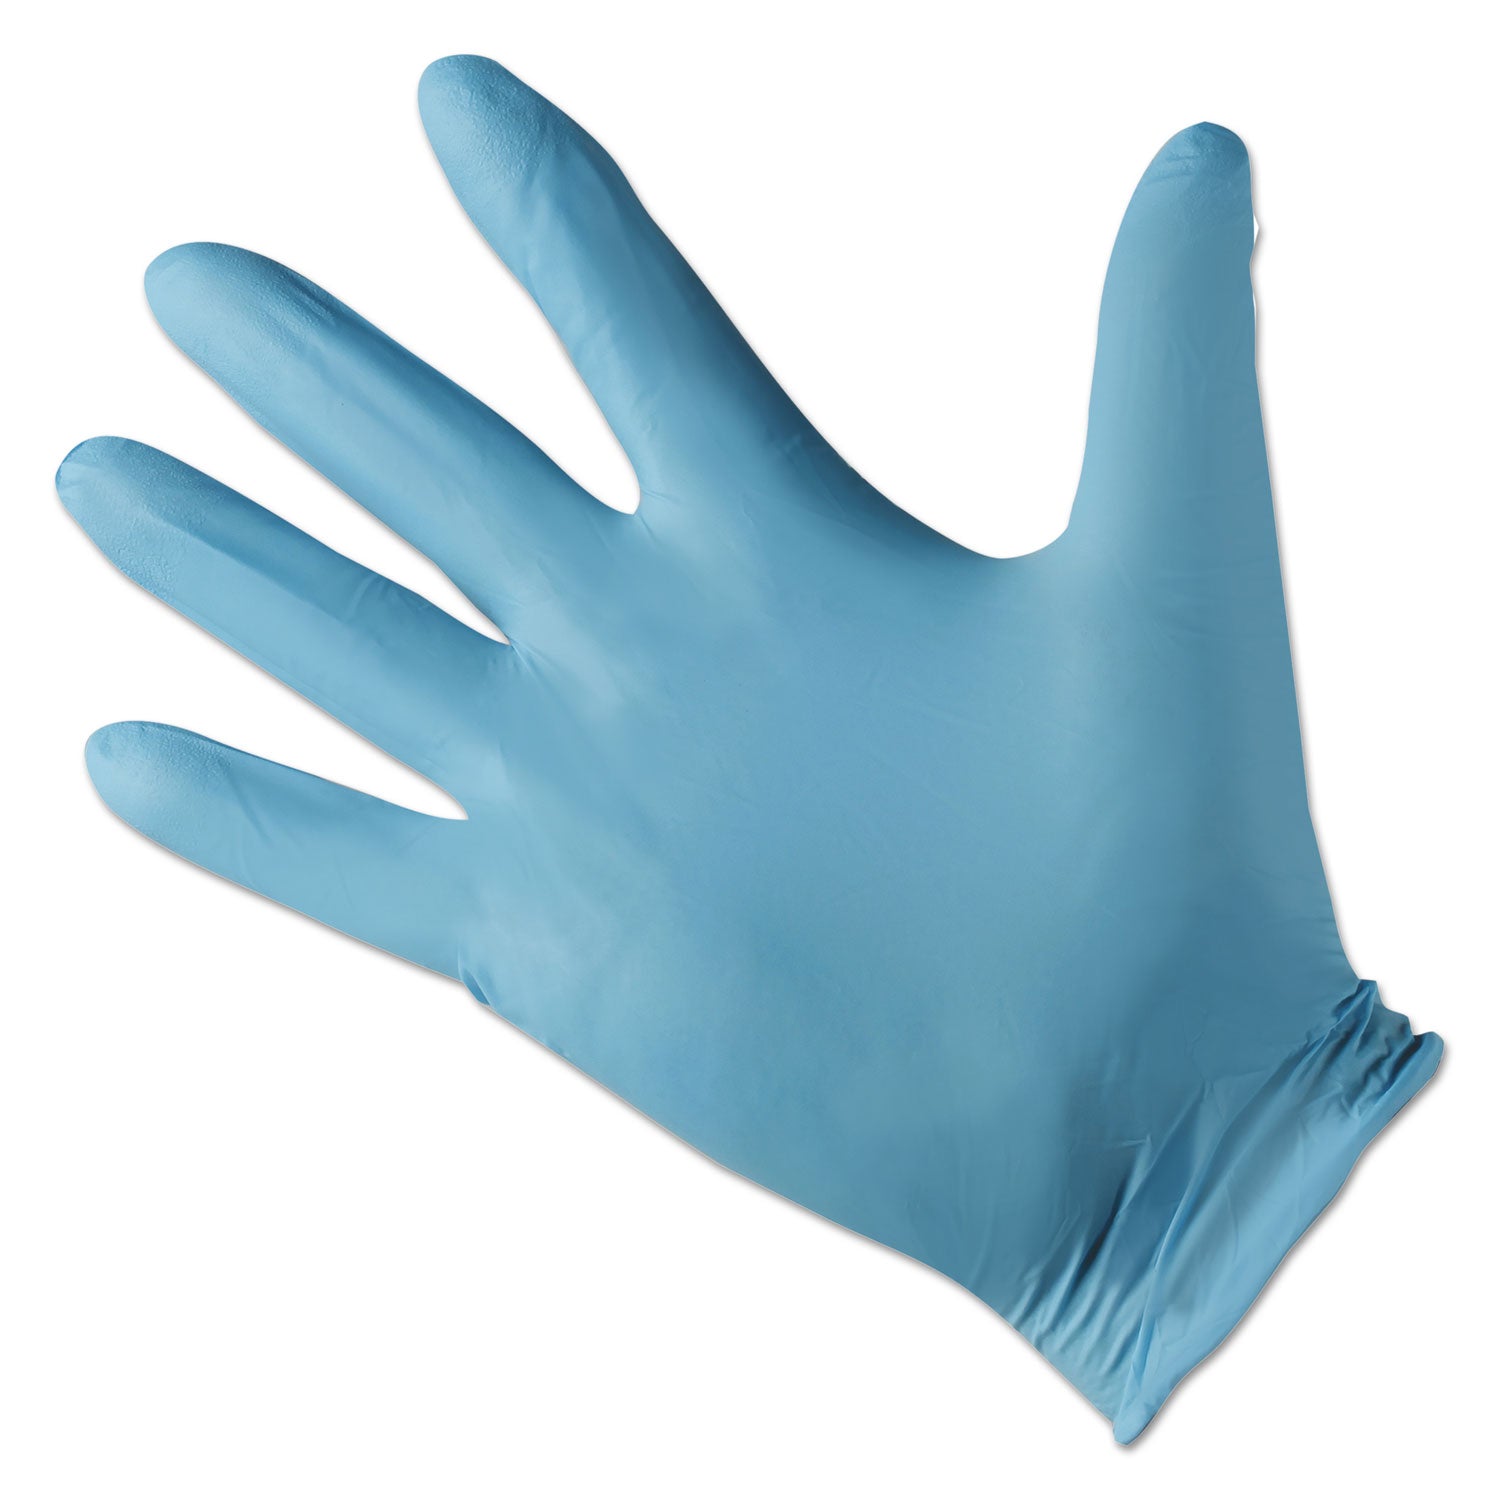 g10-nitrile-gloves-powder-free-blue-242-mm-length-large-100-box-10-boxes-carton_kcc57373ct - 1